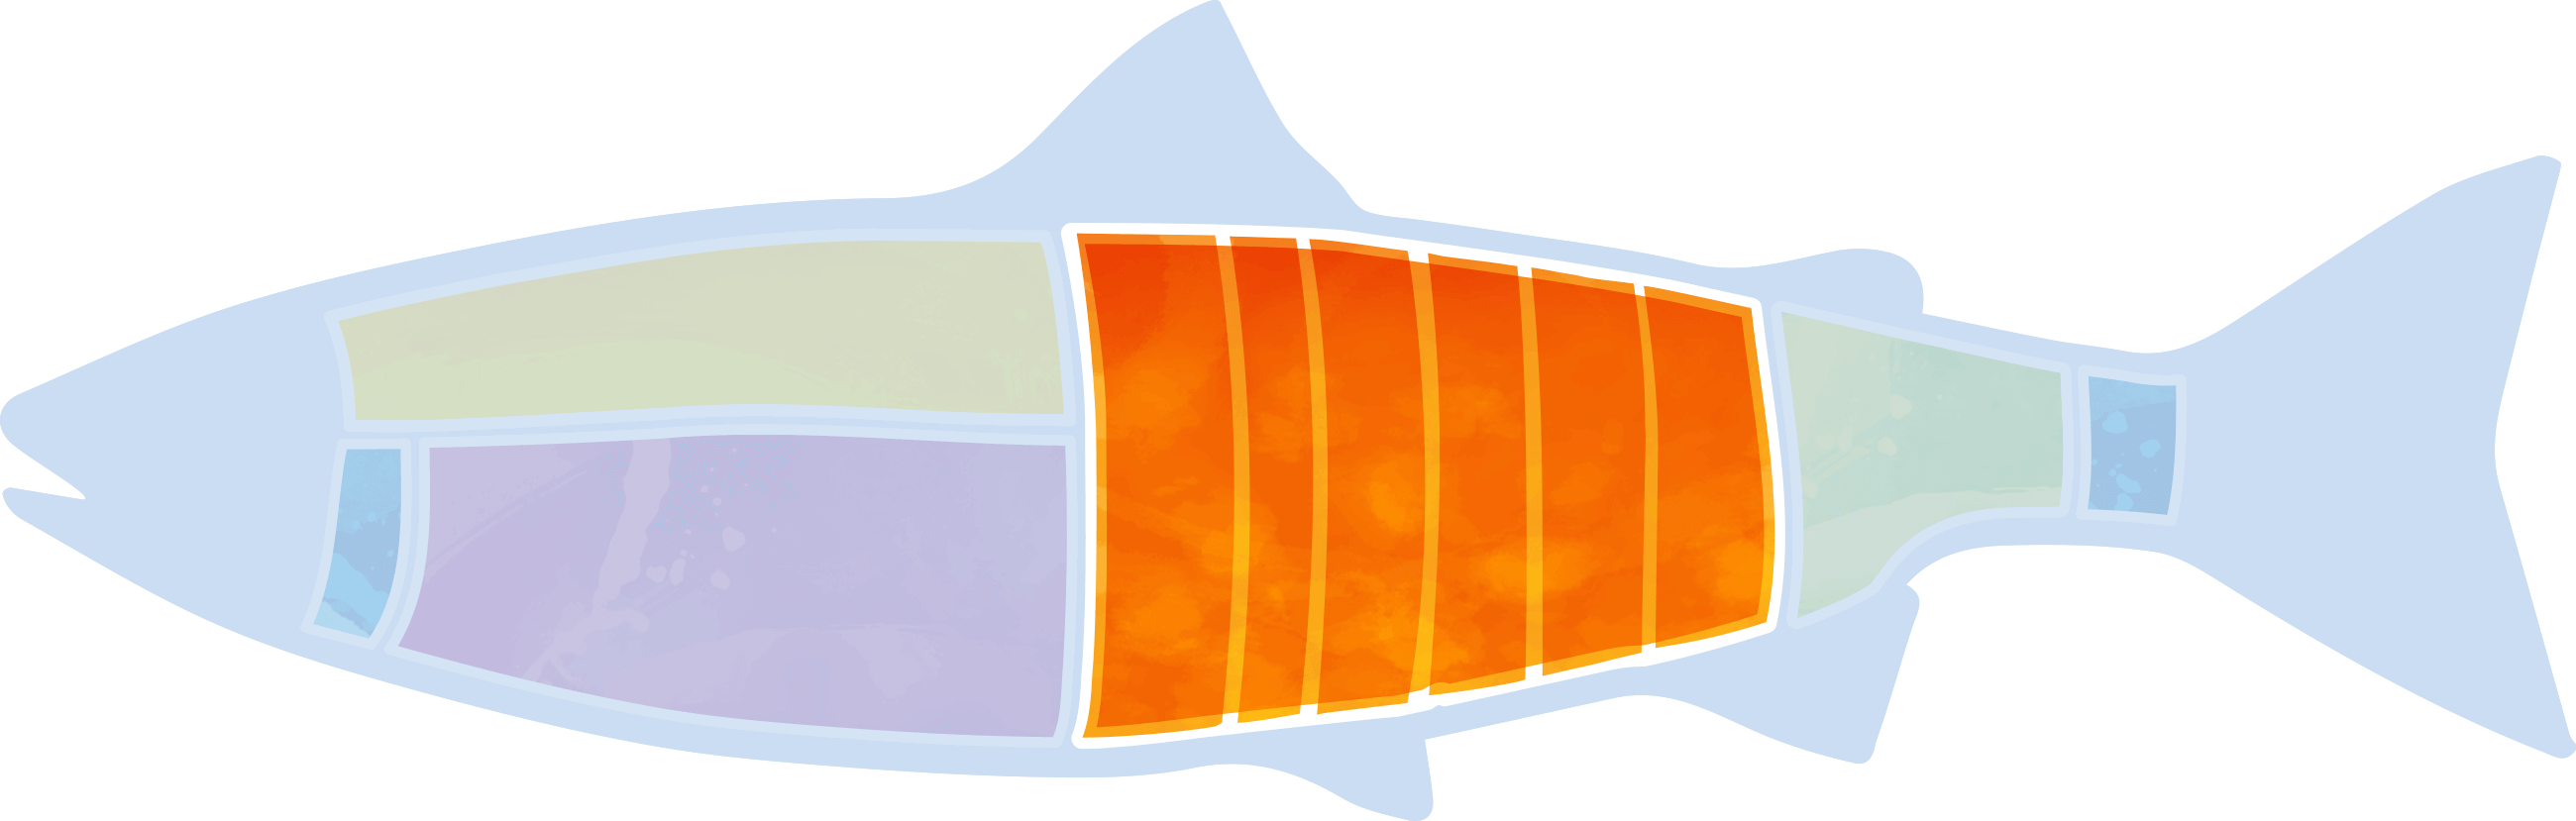 Salmon fillet cut